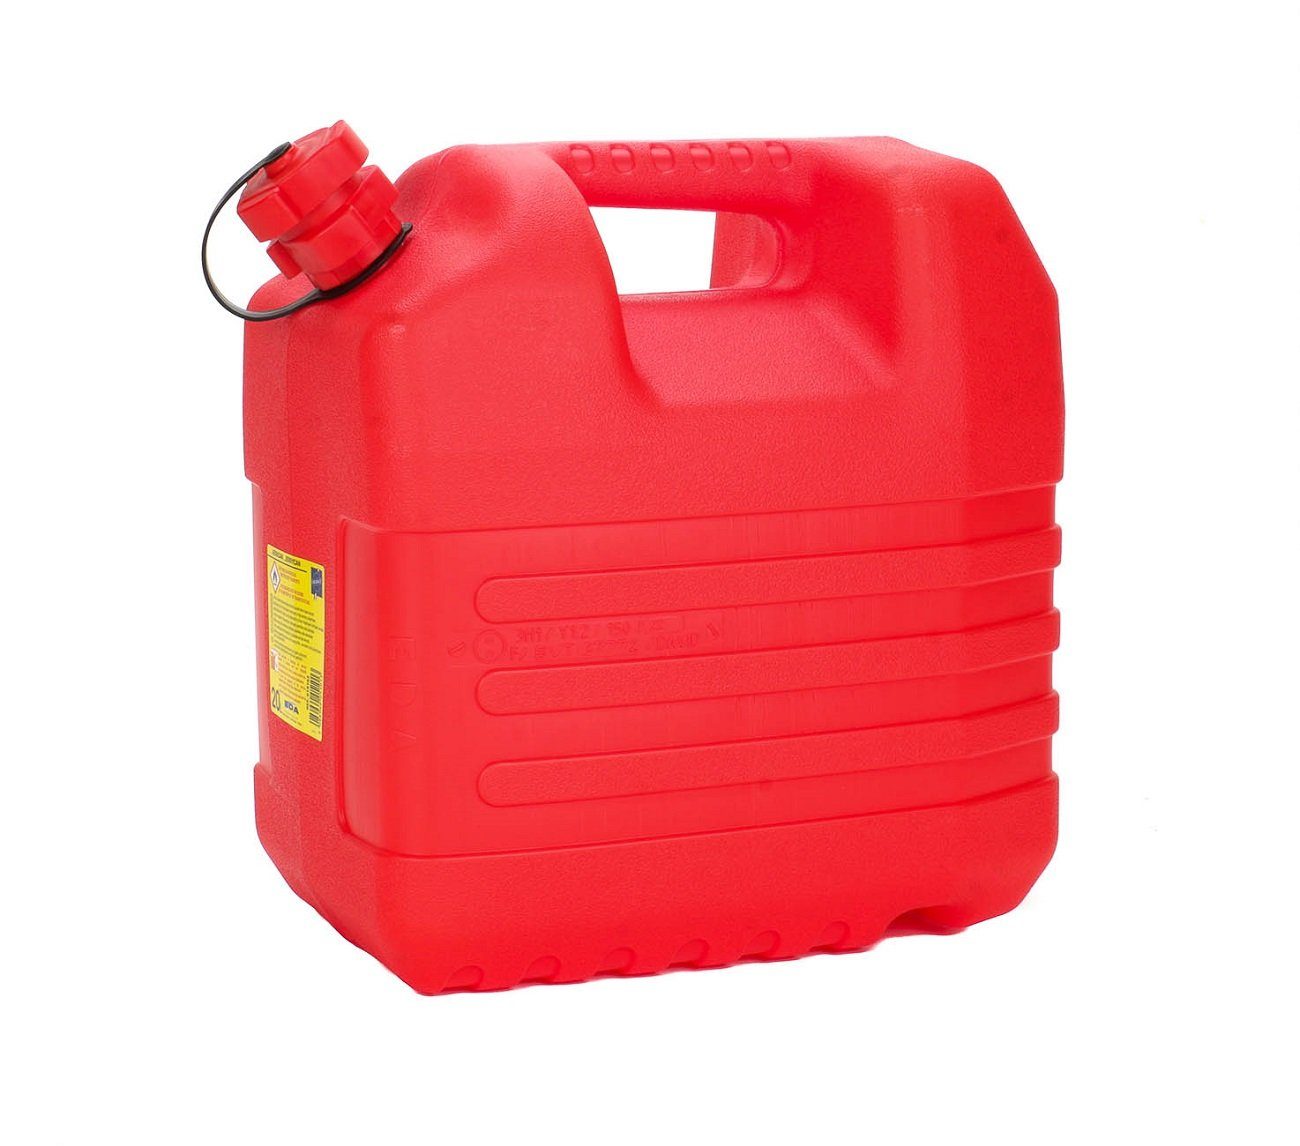 Bada Bing Benzinkanister 20 L Benzinkanister Rot Kunststoff Kanister  Ausgießer Reservekanister (1 St), 20 Liter Vassungsvermögen